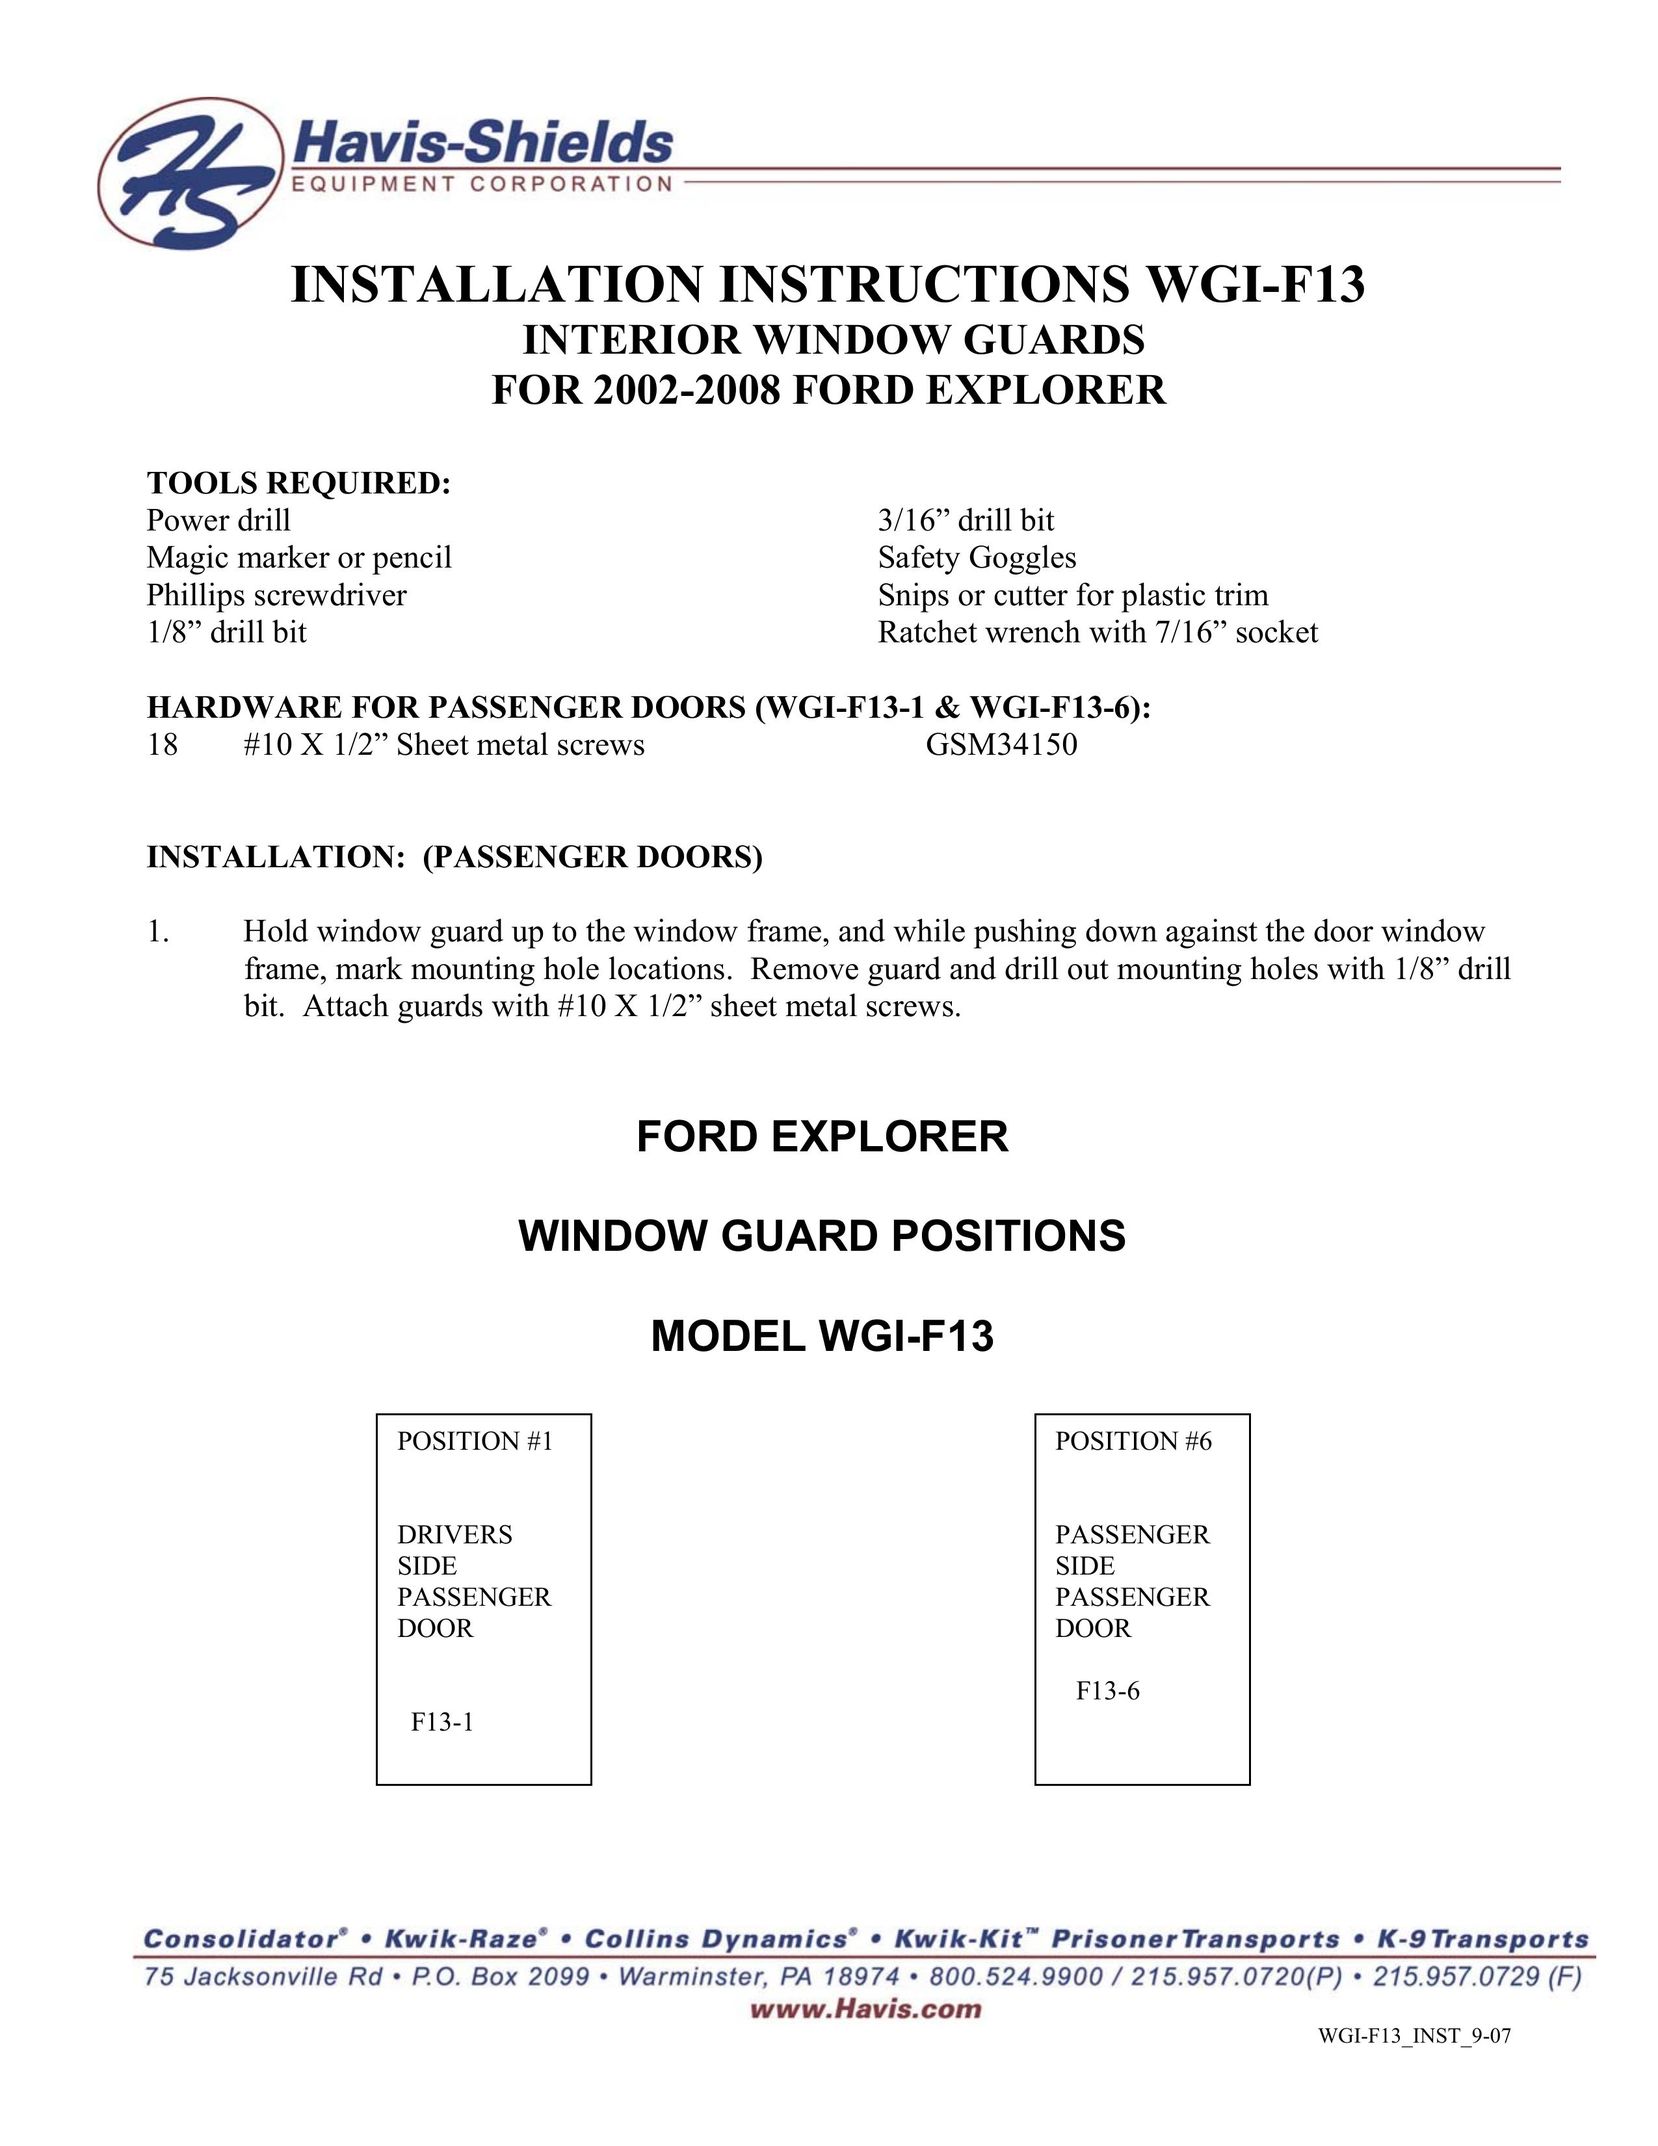 Havis-Shields WGI-F13 Window User Manual